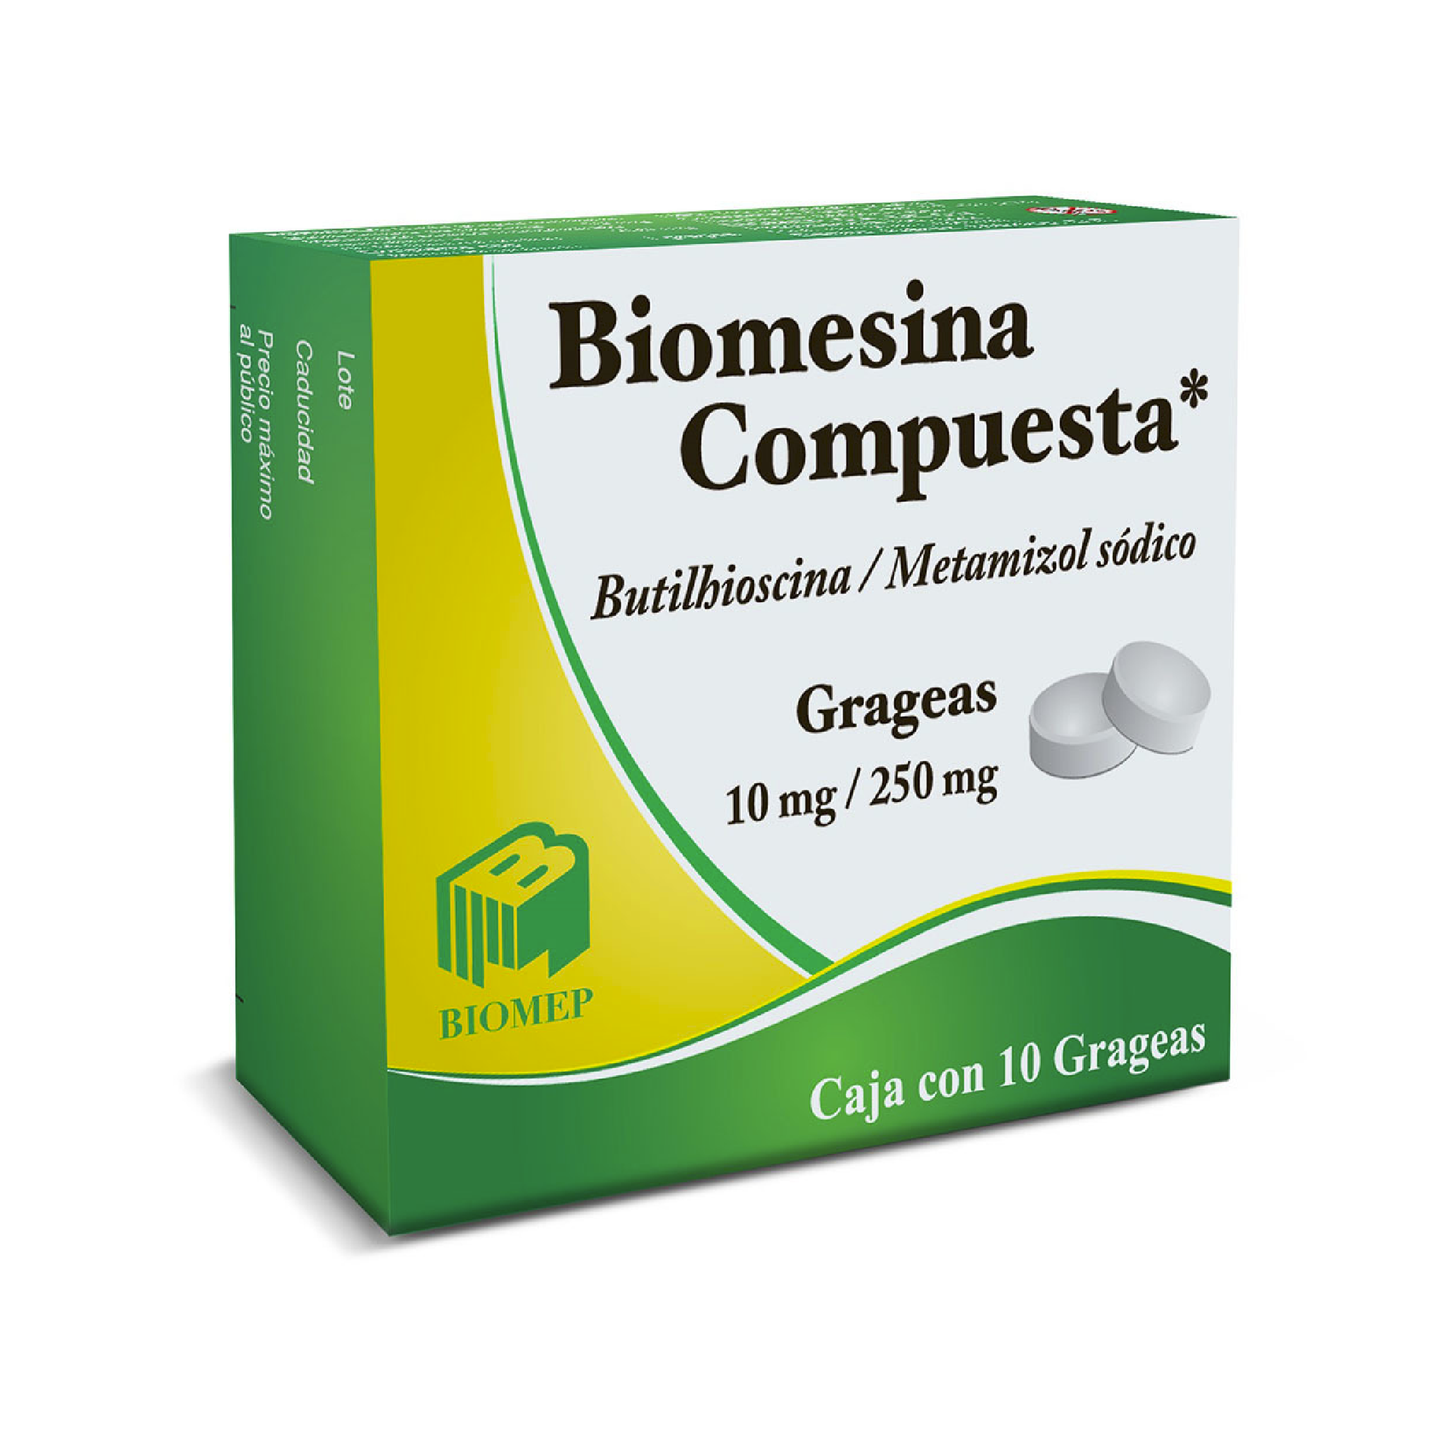 Biomesina Compuesta (Butilhioscina, Metamizol sódico) GG 10mg, 250mg